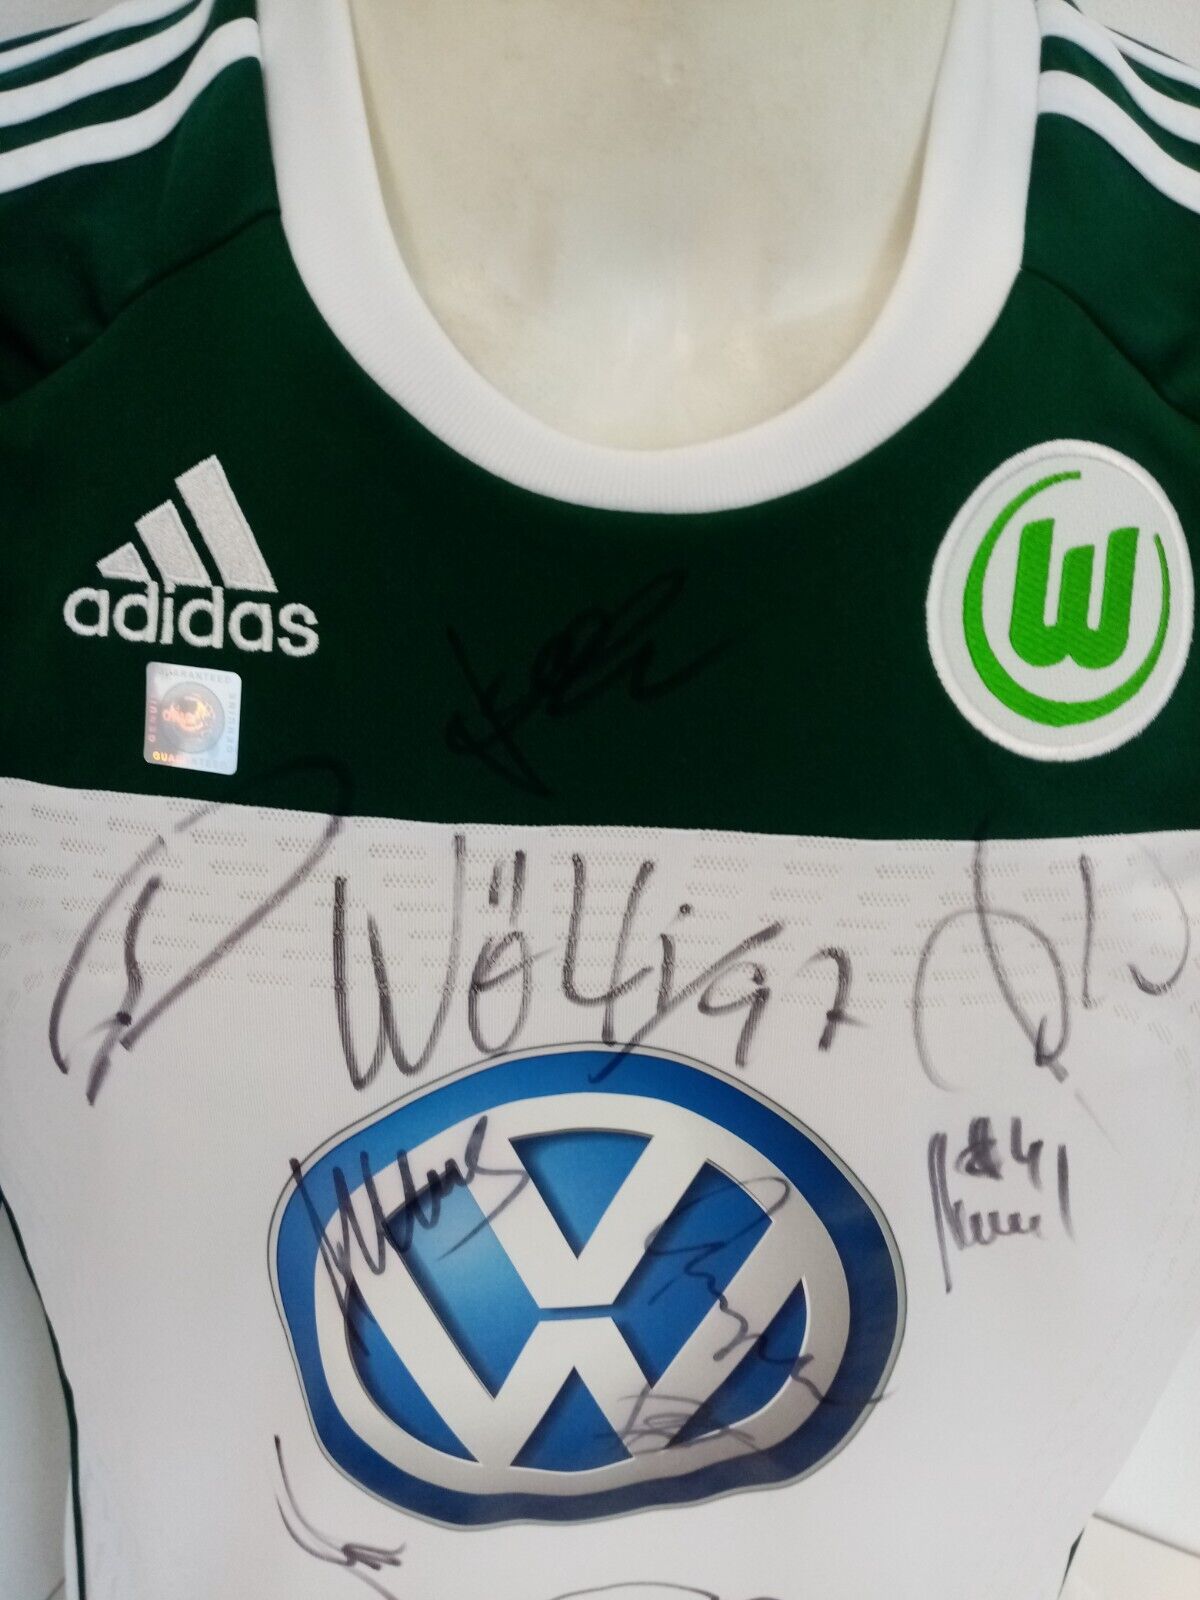 VFL Wolfsburg Trikot 10/11 Teamsigniert Autogramm Fußball Adidas Bundesliga M